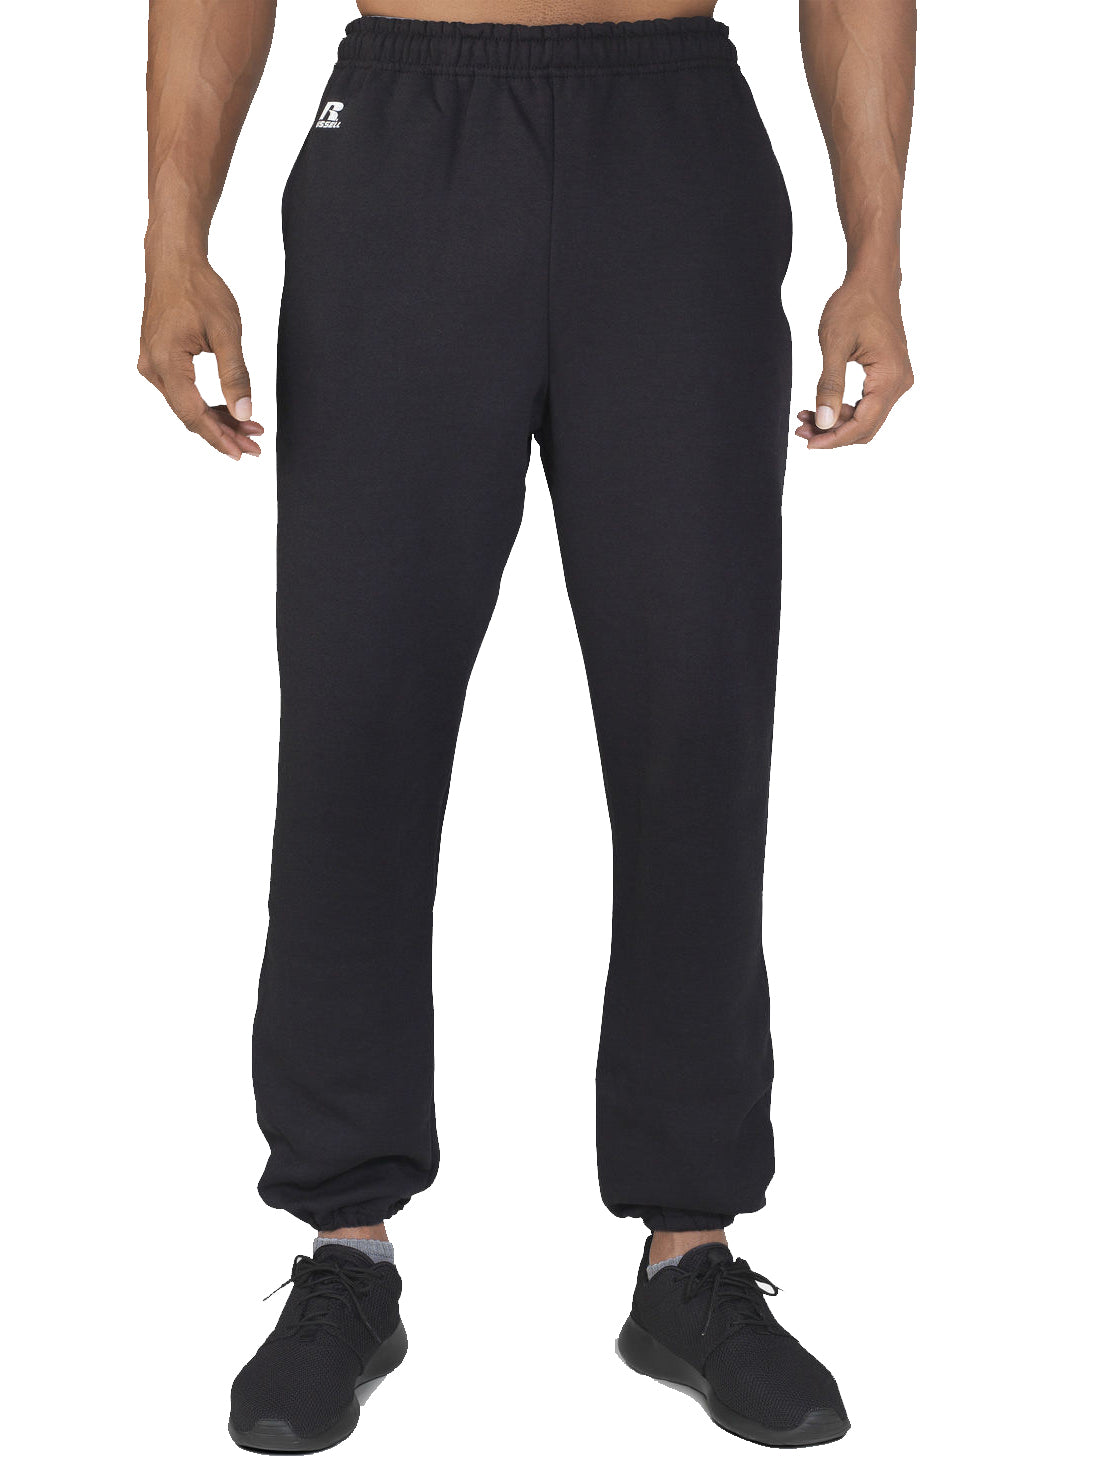 Russell Athletic Men's Dri Power Open Bottom Pocket Sweatpants